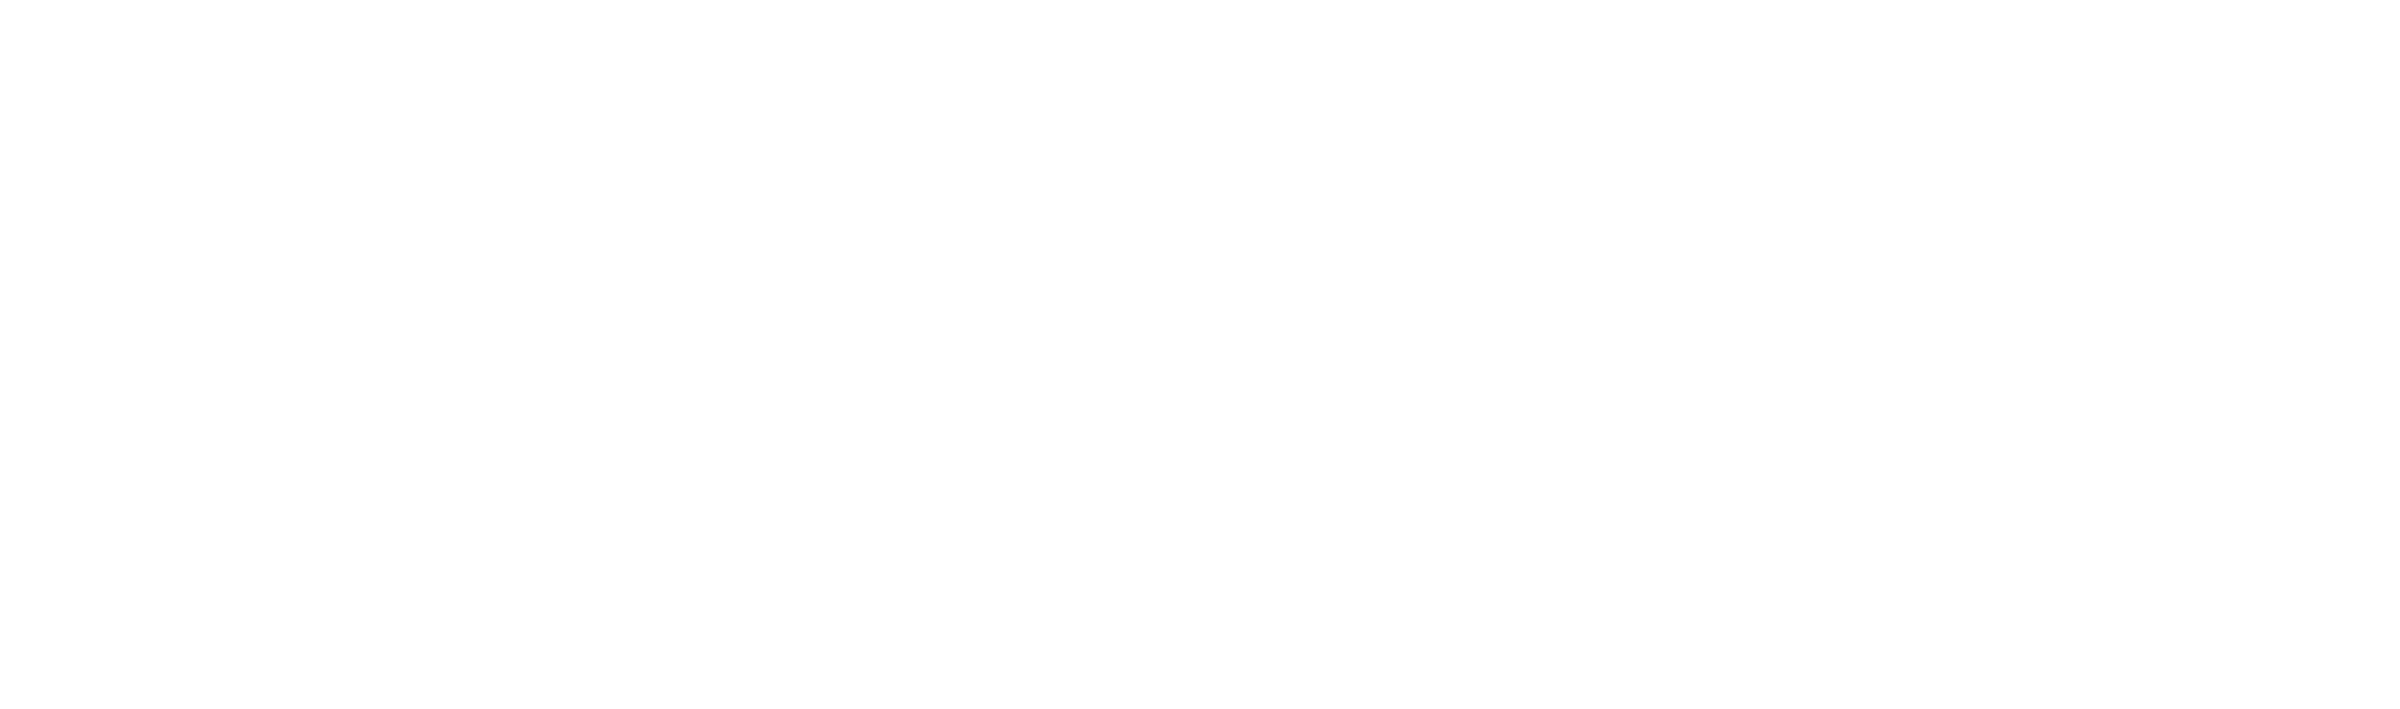  Georgia Southern University Logo.